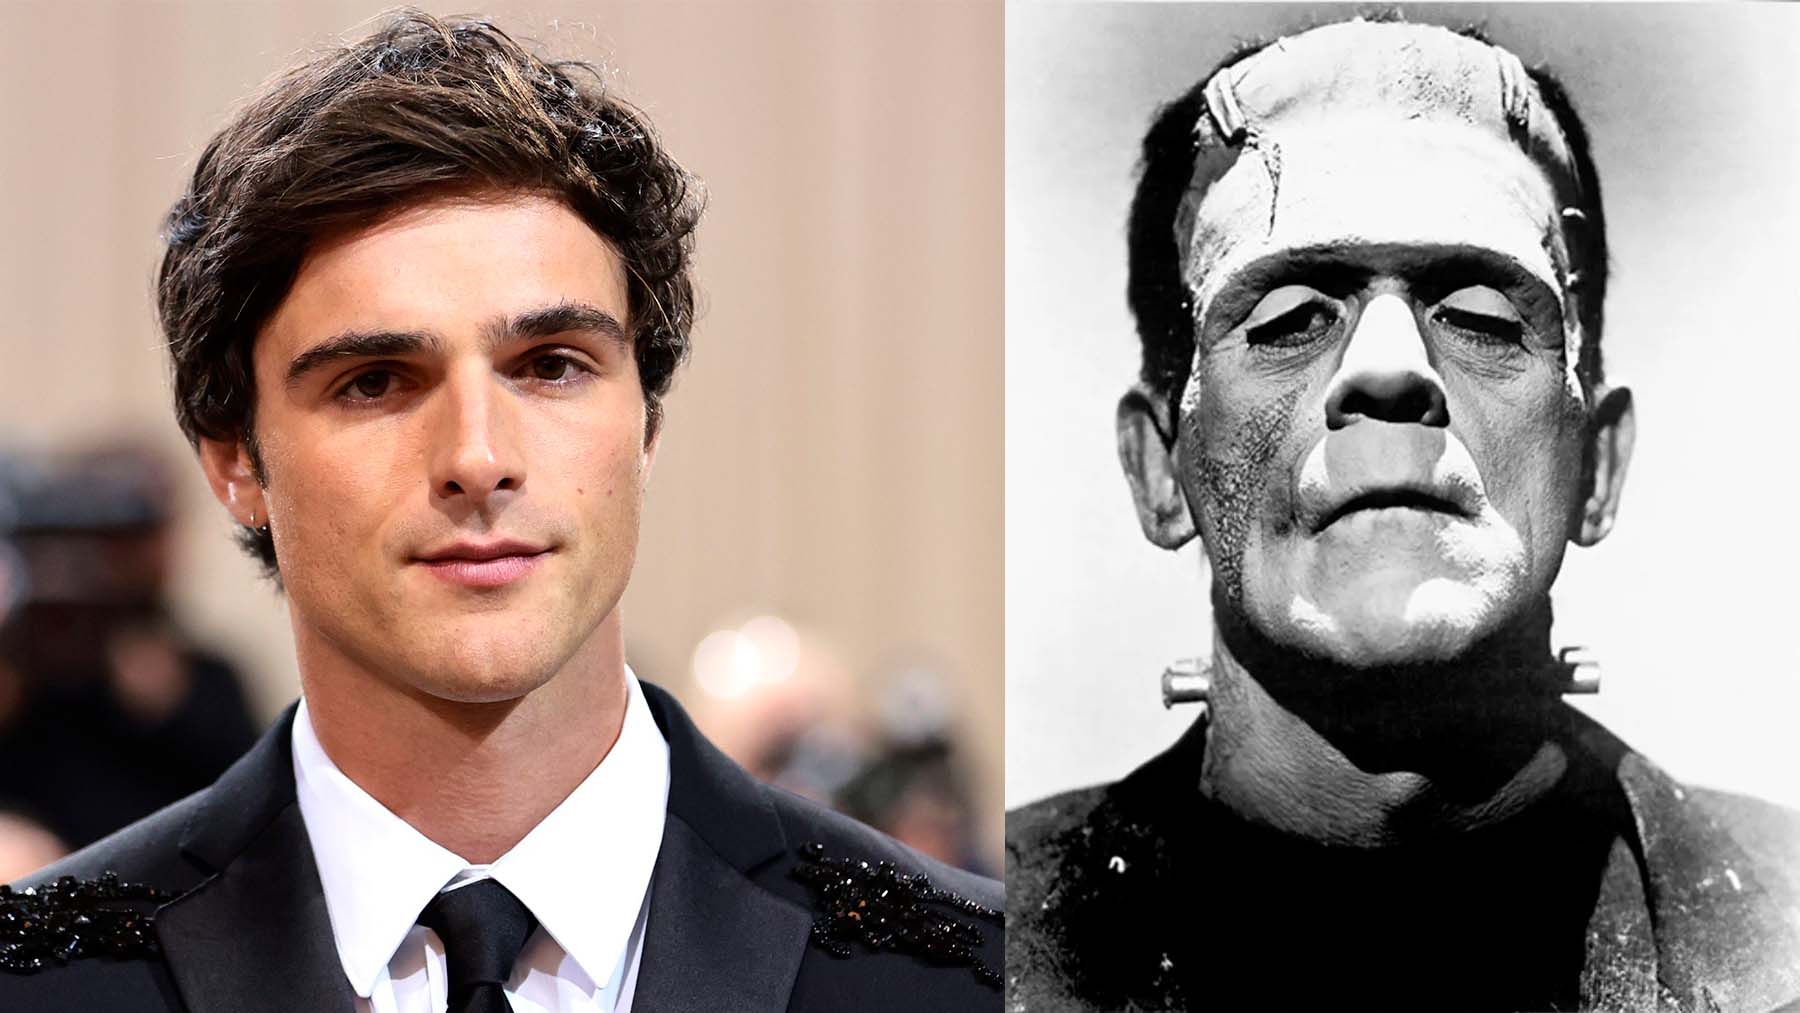 Jacob Elordi interpretará al monstruo de Frankenstein en la nueva película de Guillermo del Toro para Netflix